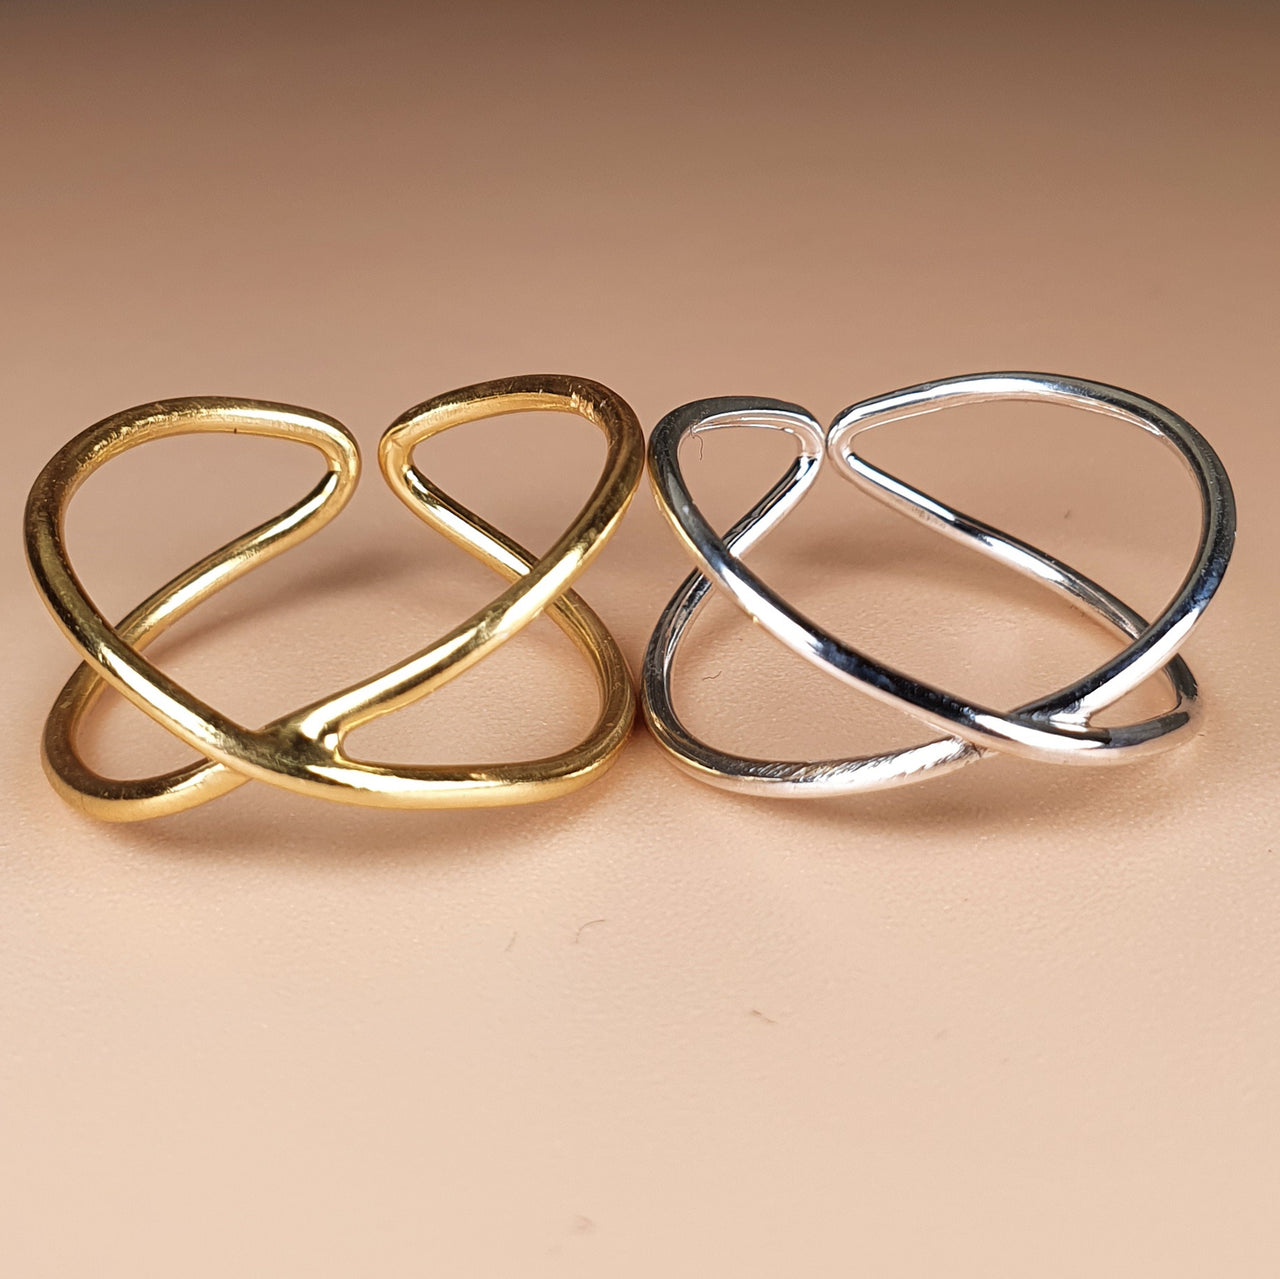 Vermeil 14k gold adjustable stylish ring